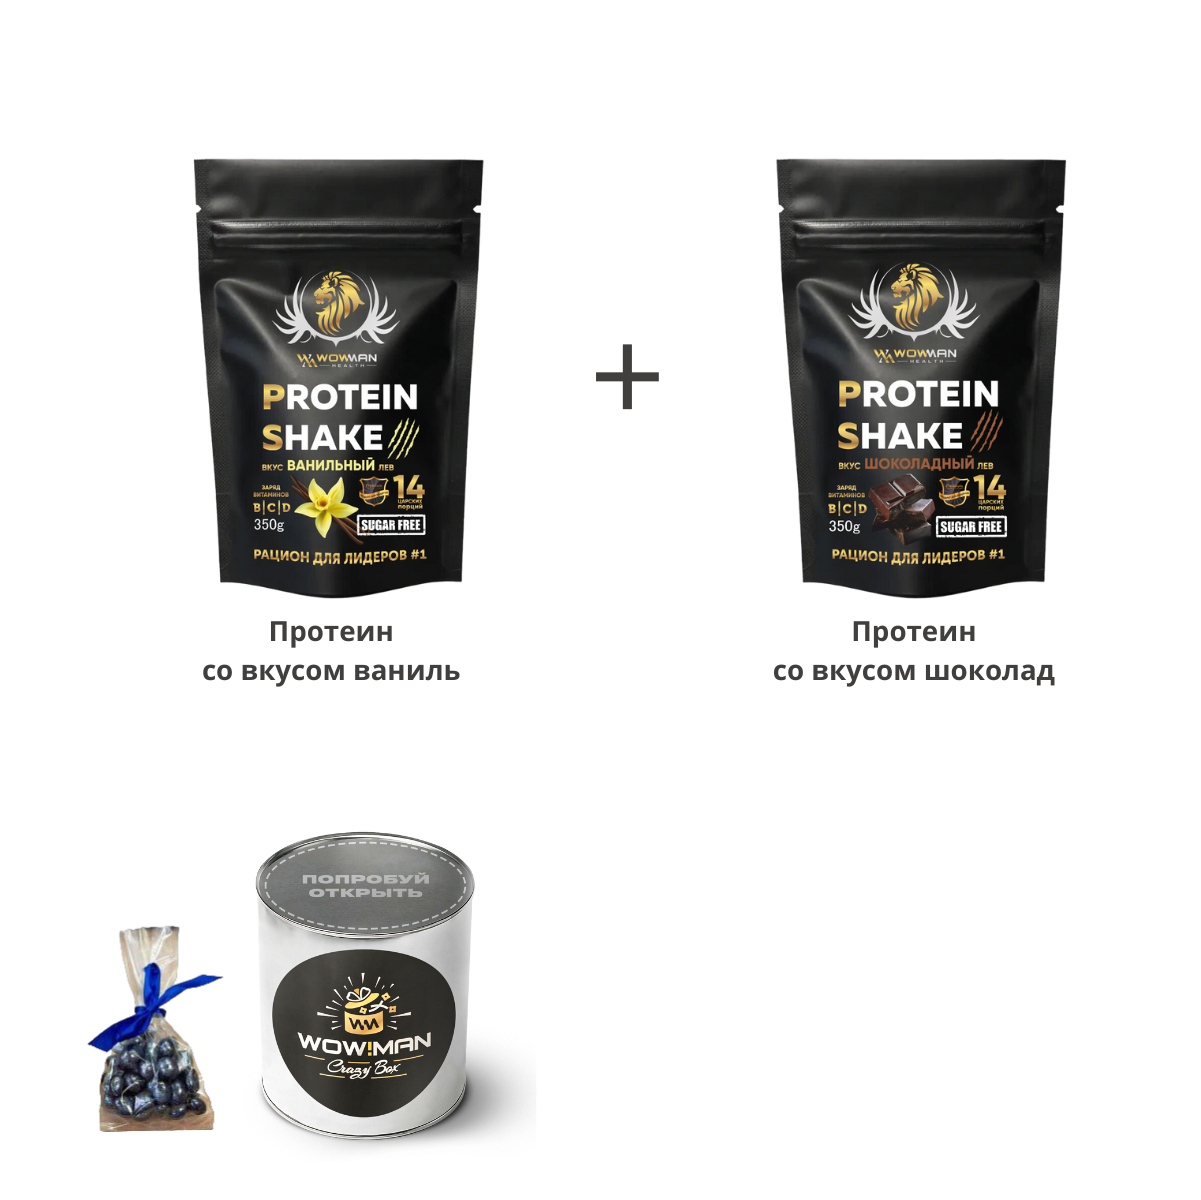 Подарочный набор WowMan Протеин вкус ваниль + Протеин вкус шоколад